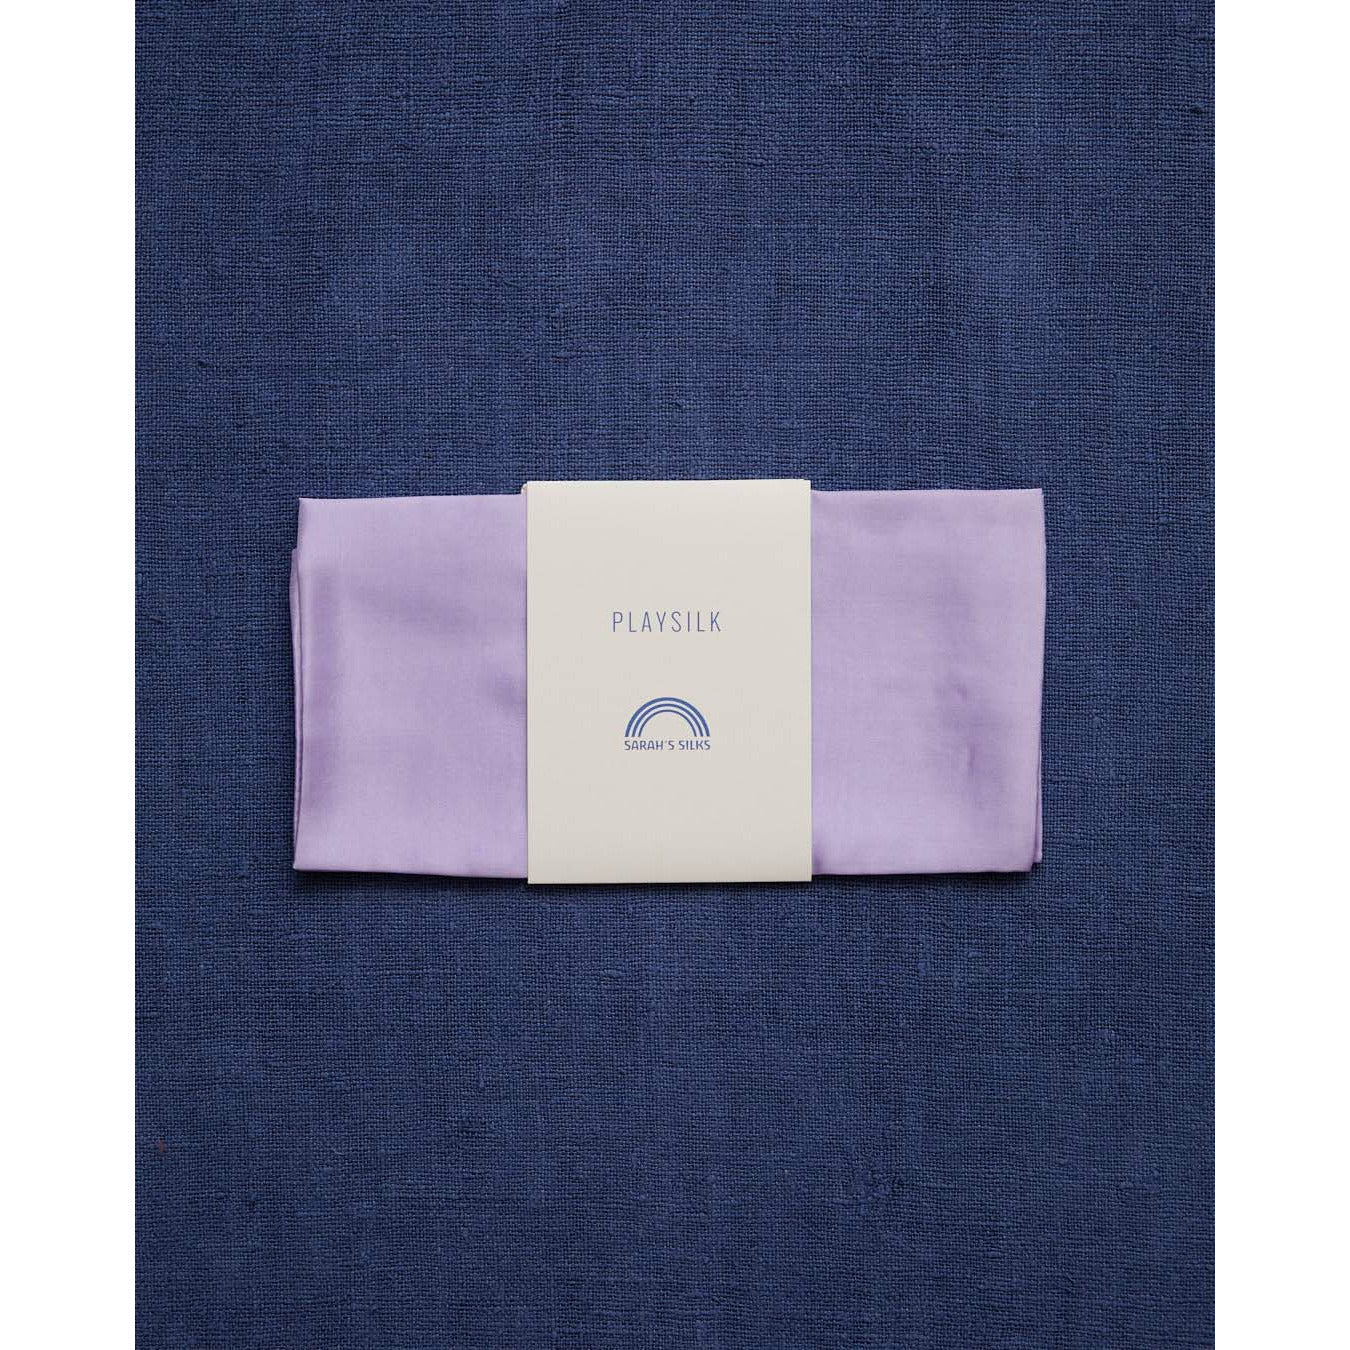 A silk scarf in lavender.